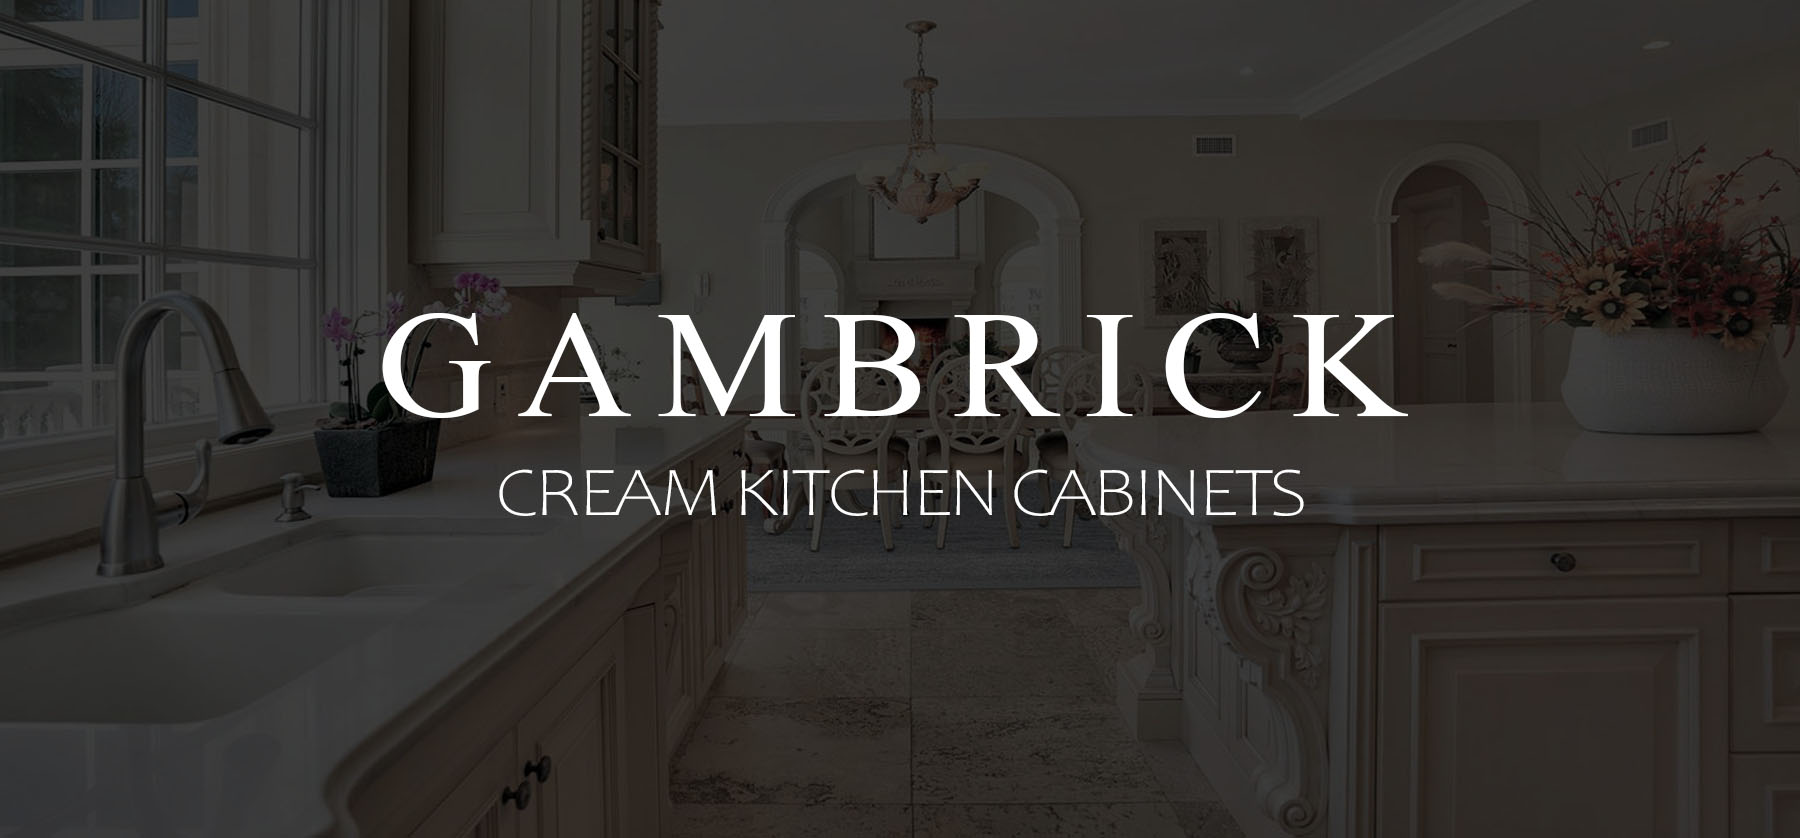 Cream Kitchen Cabinets Design Ideas For Beautiful Kitchens